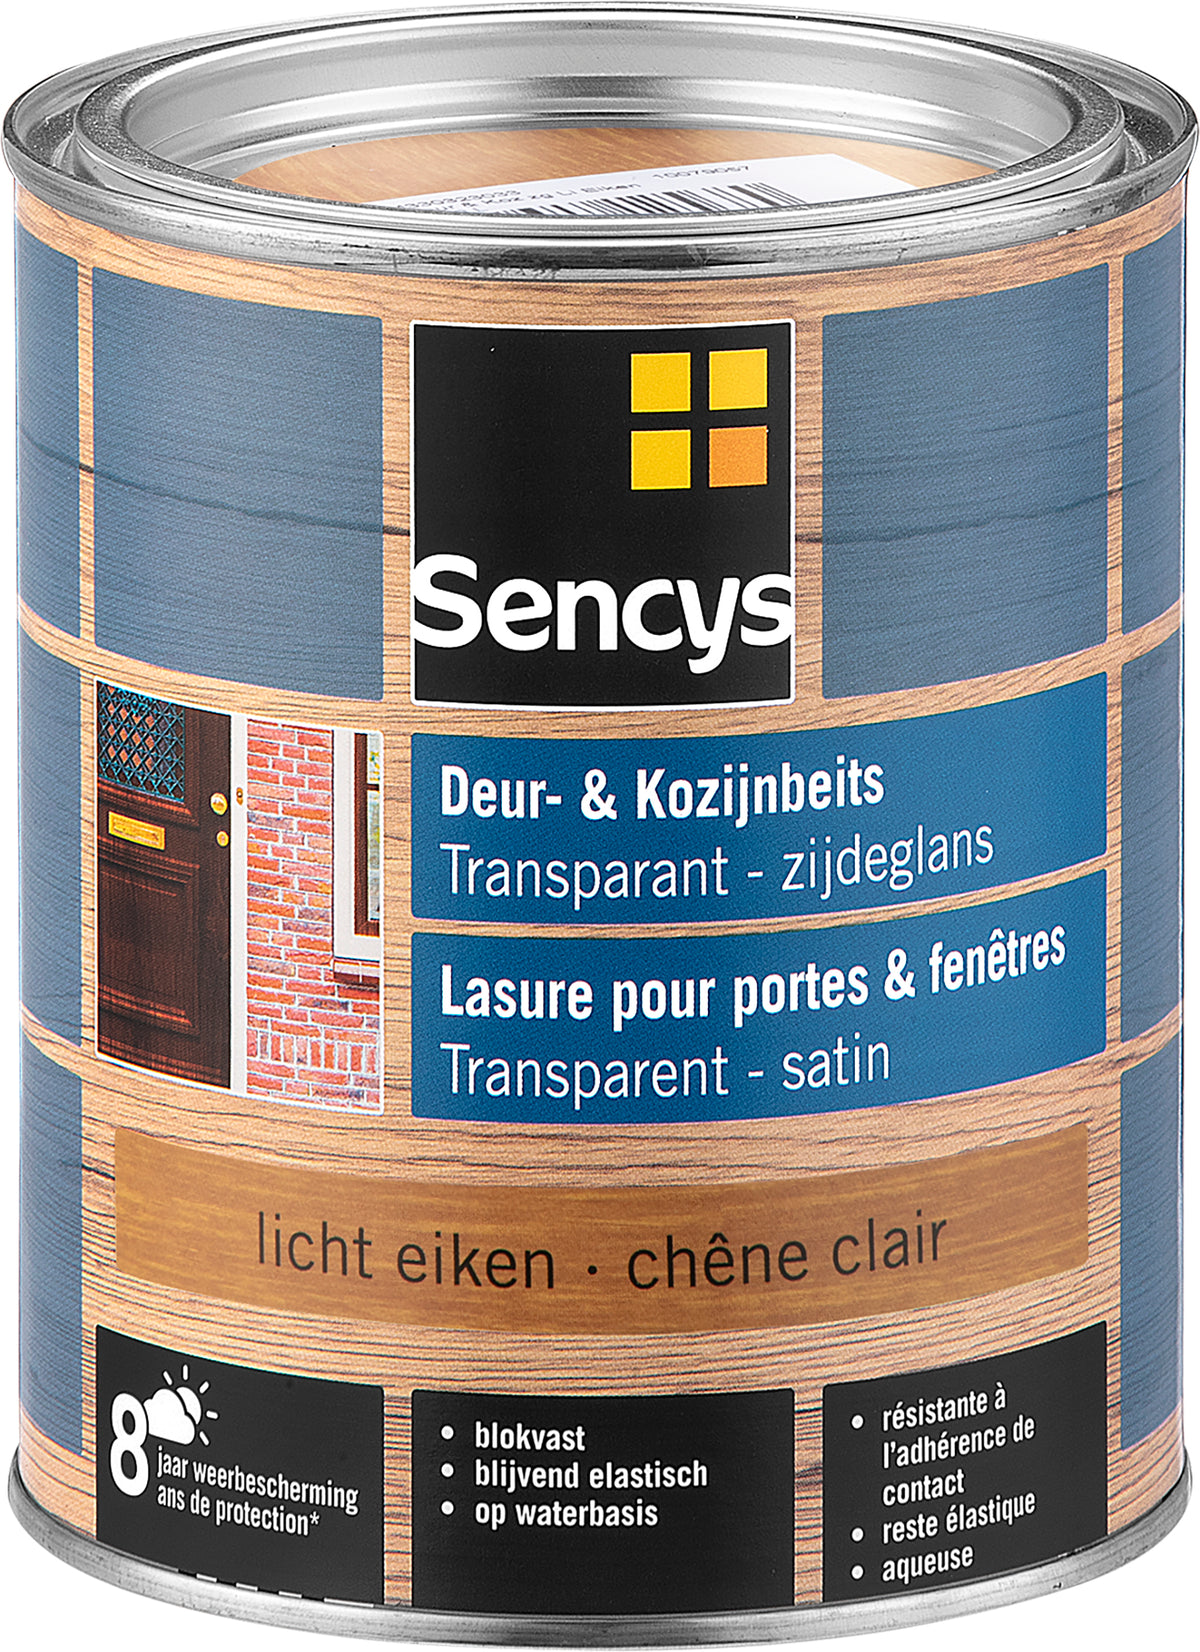 Sencys beits ramen en deuren semi-transparant zijdeglans lichte eiken 0,75L